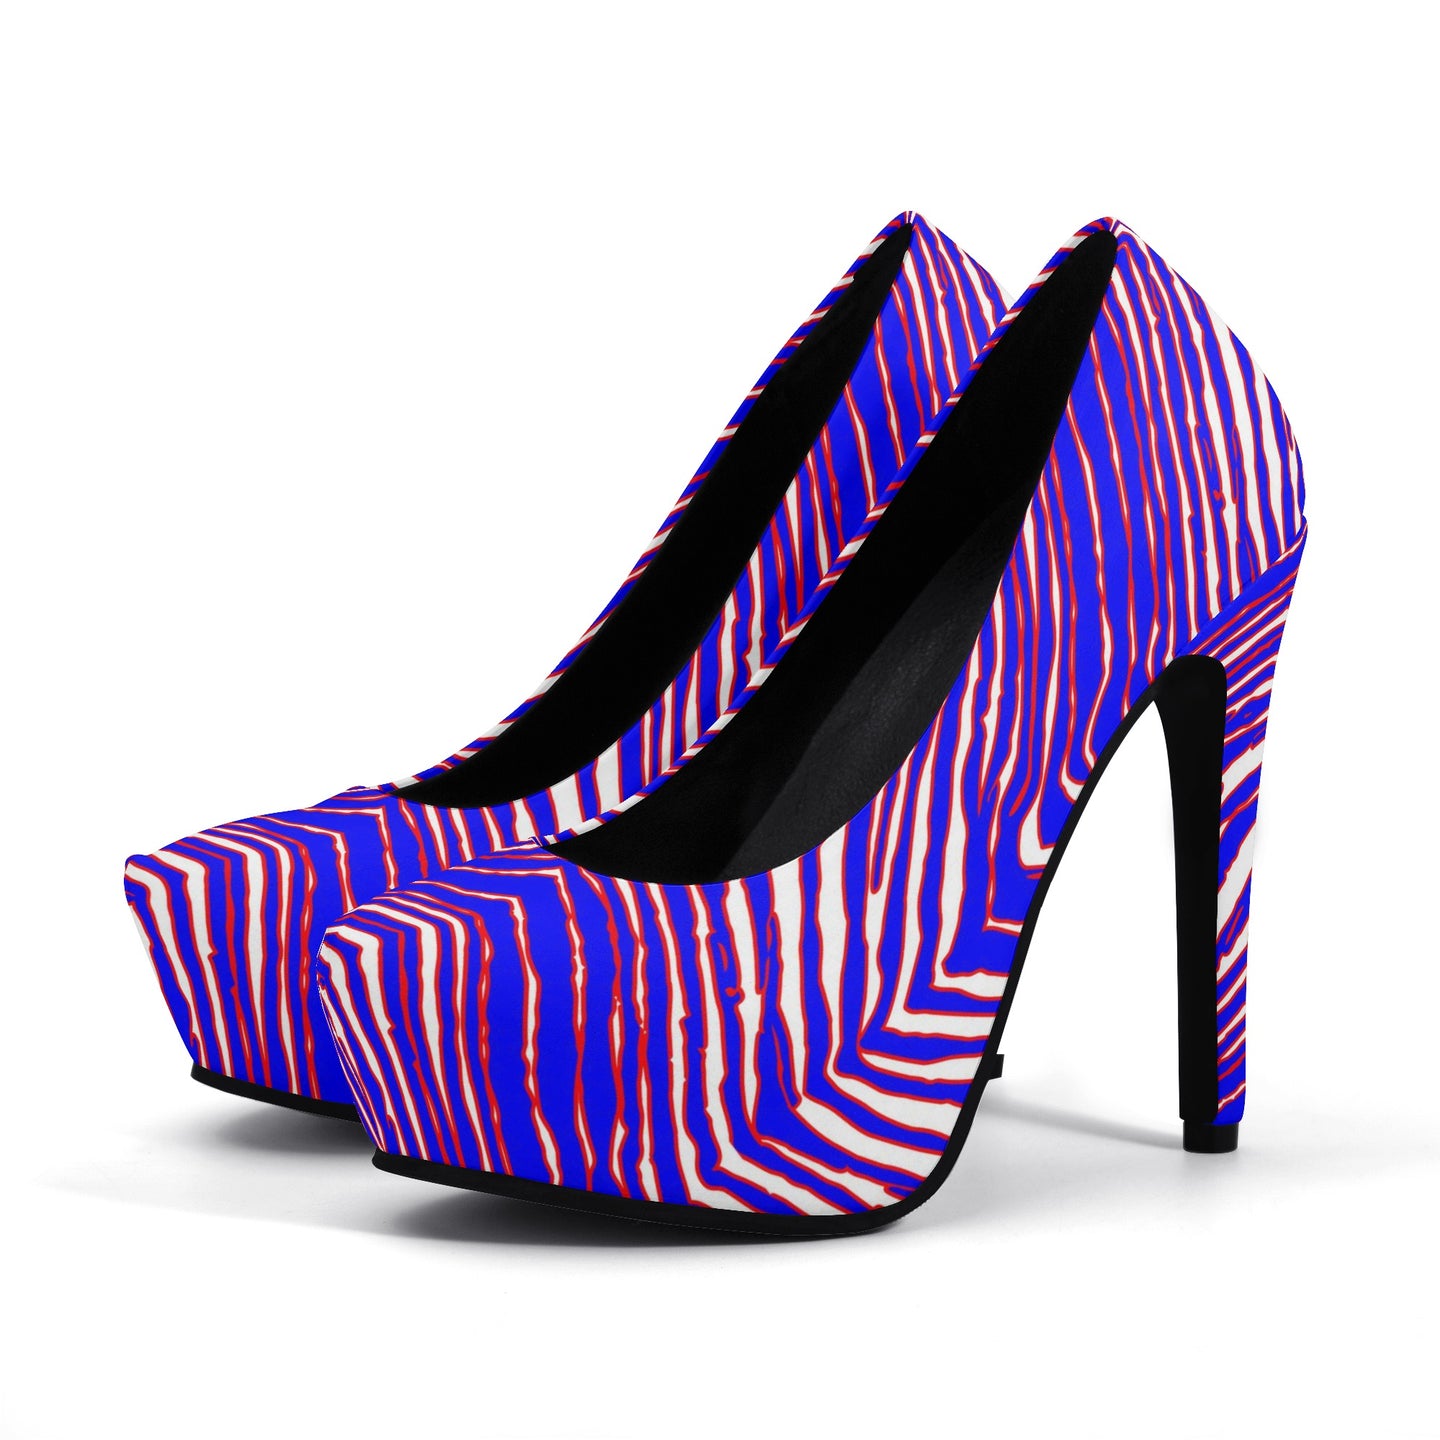 Zapatos de plataforma Zubaz para mujer, tacones altos de 5 pulgadas